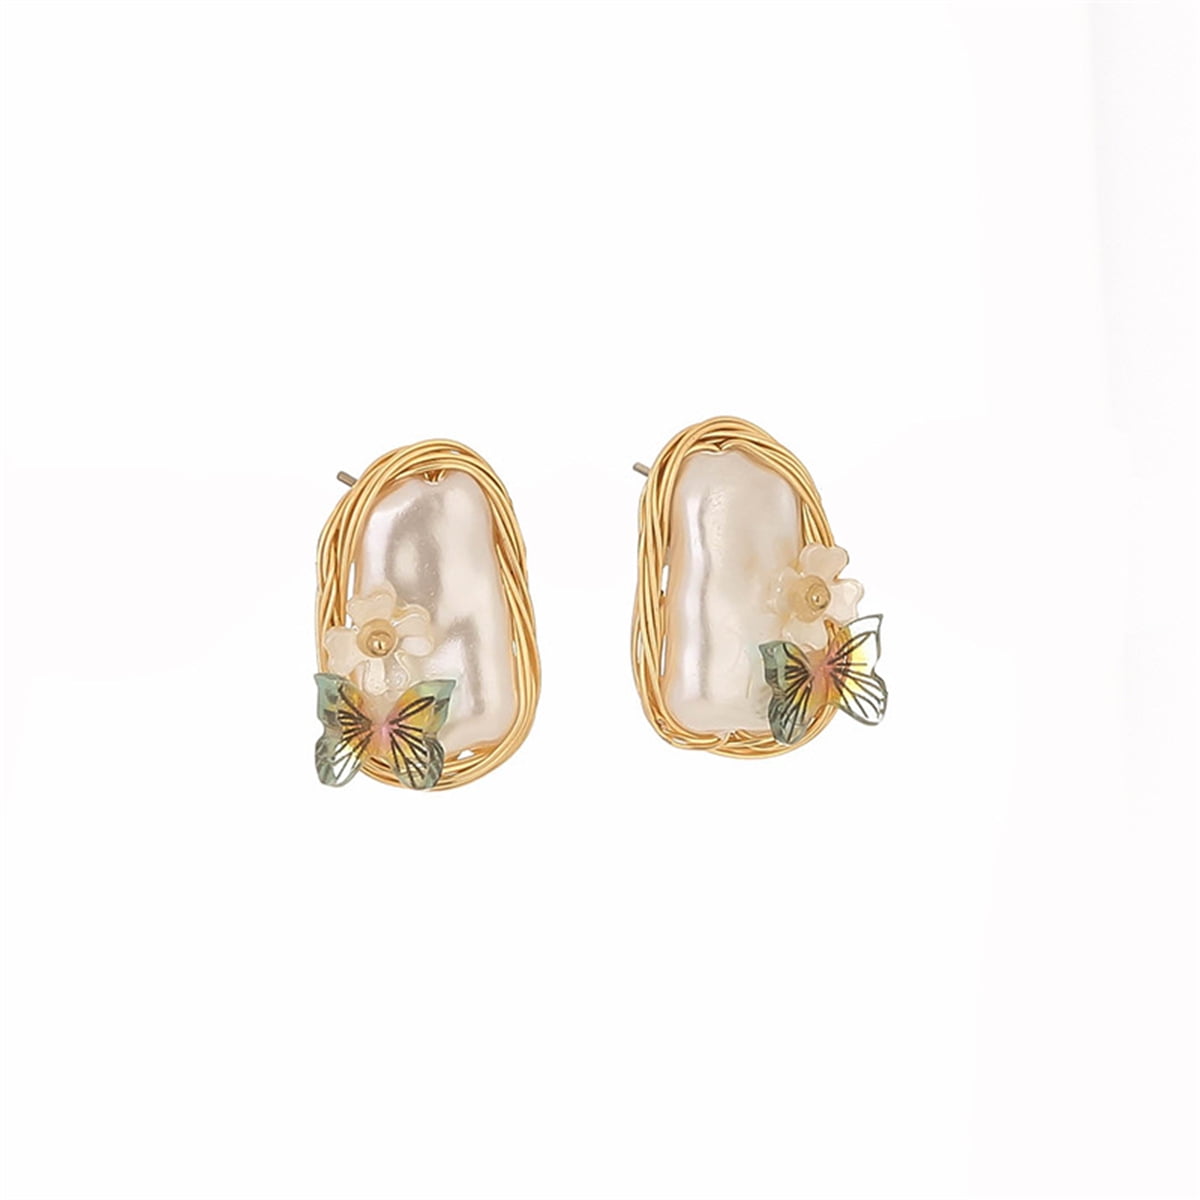 Details about   Multi-Color Baroque Pearl Long Section Earring 18k Ear Stud Women Aurora 